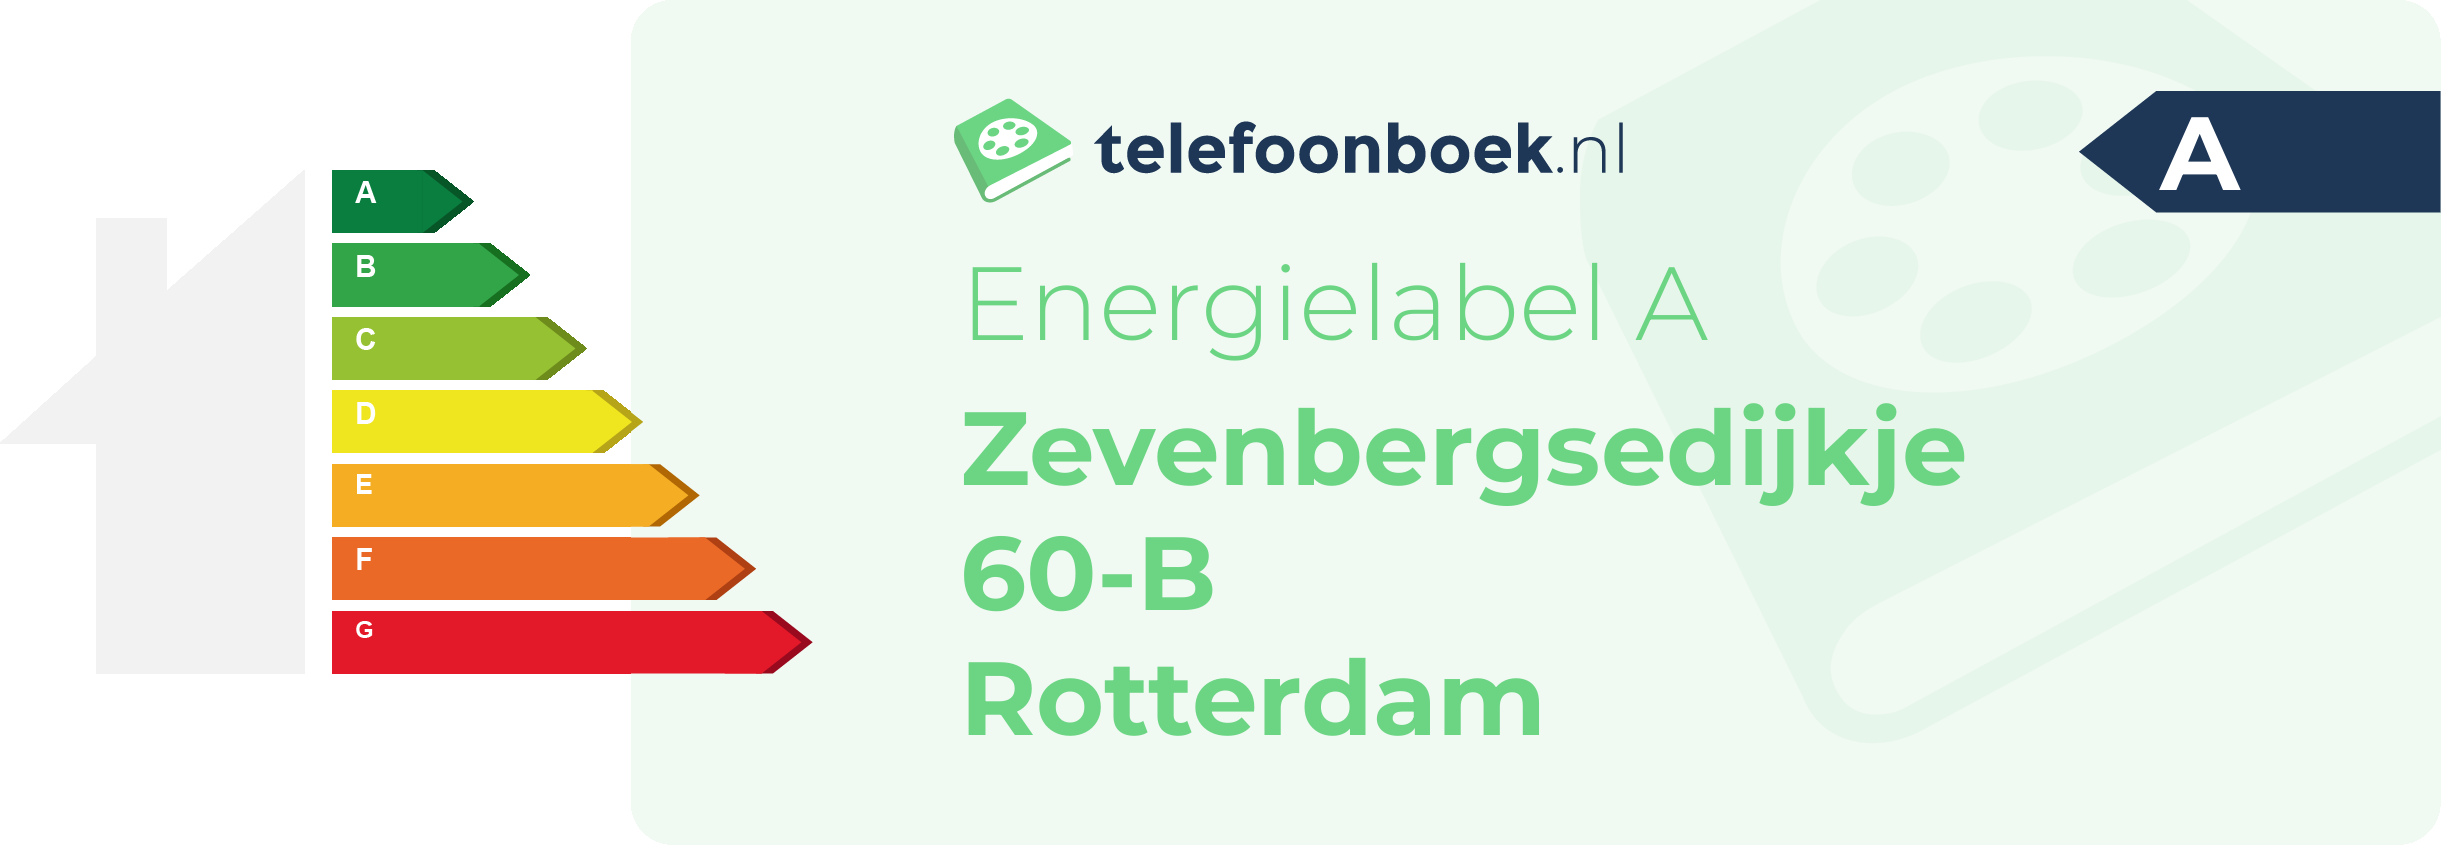 Energielabel Zevenbergsedijkje 60-B Rotterdam